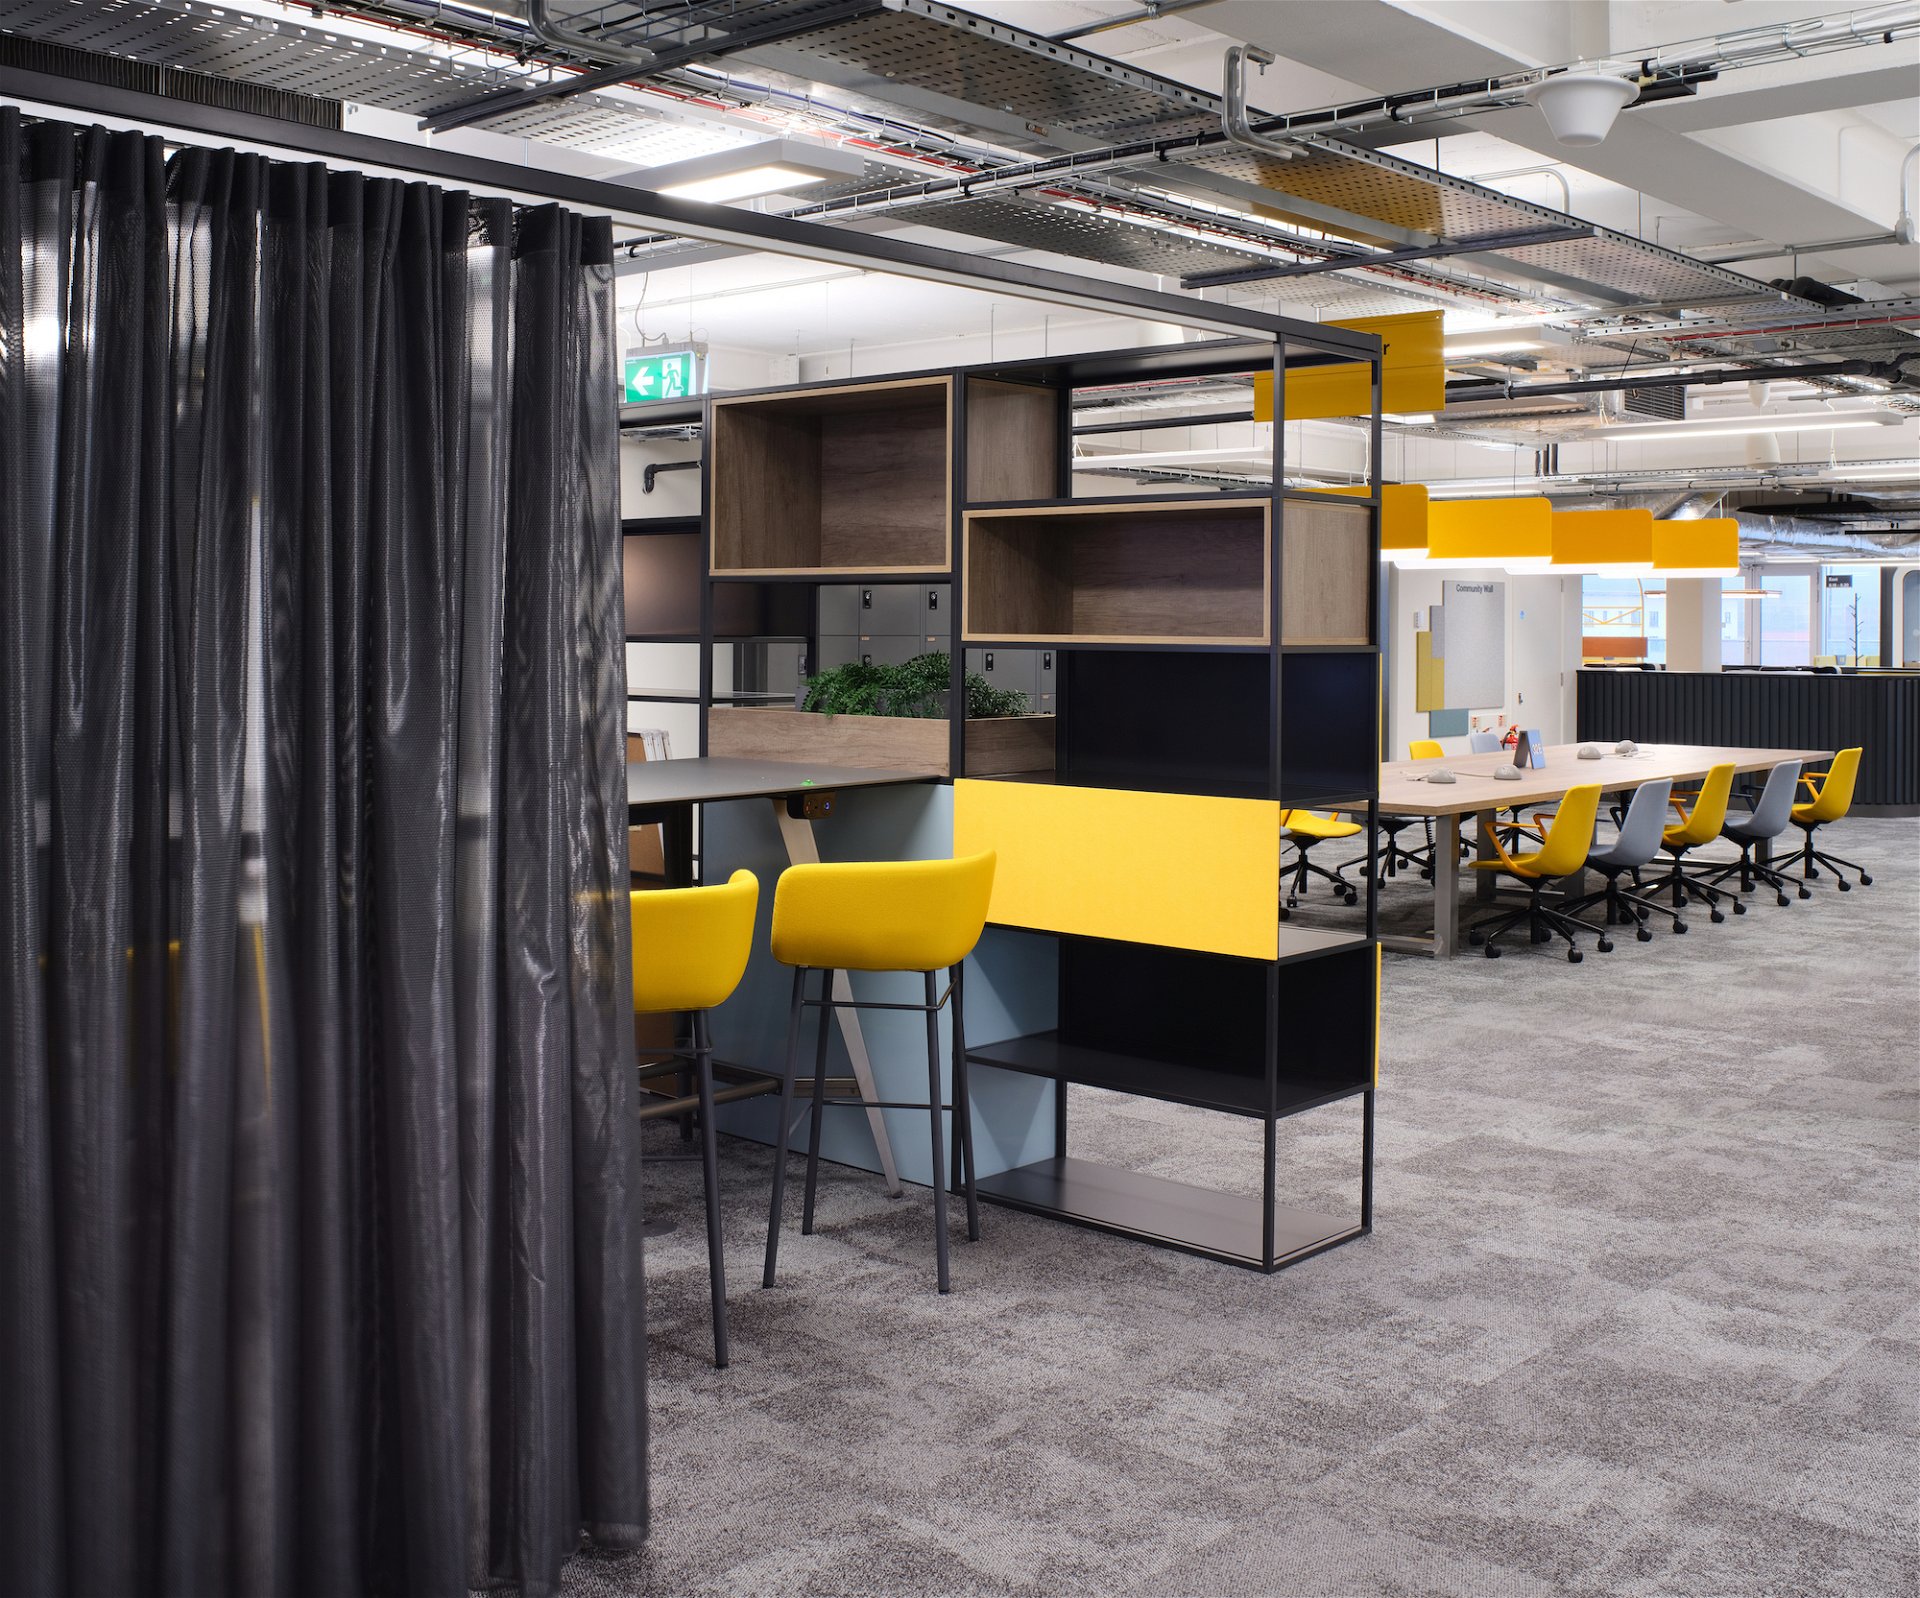 KI Furniture Brings Versatility and A Sense of Heritage to PwC’s New Belfast Office - LTD - News